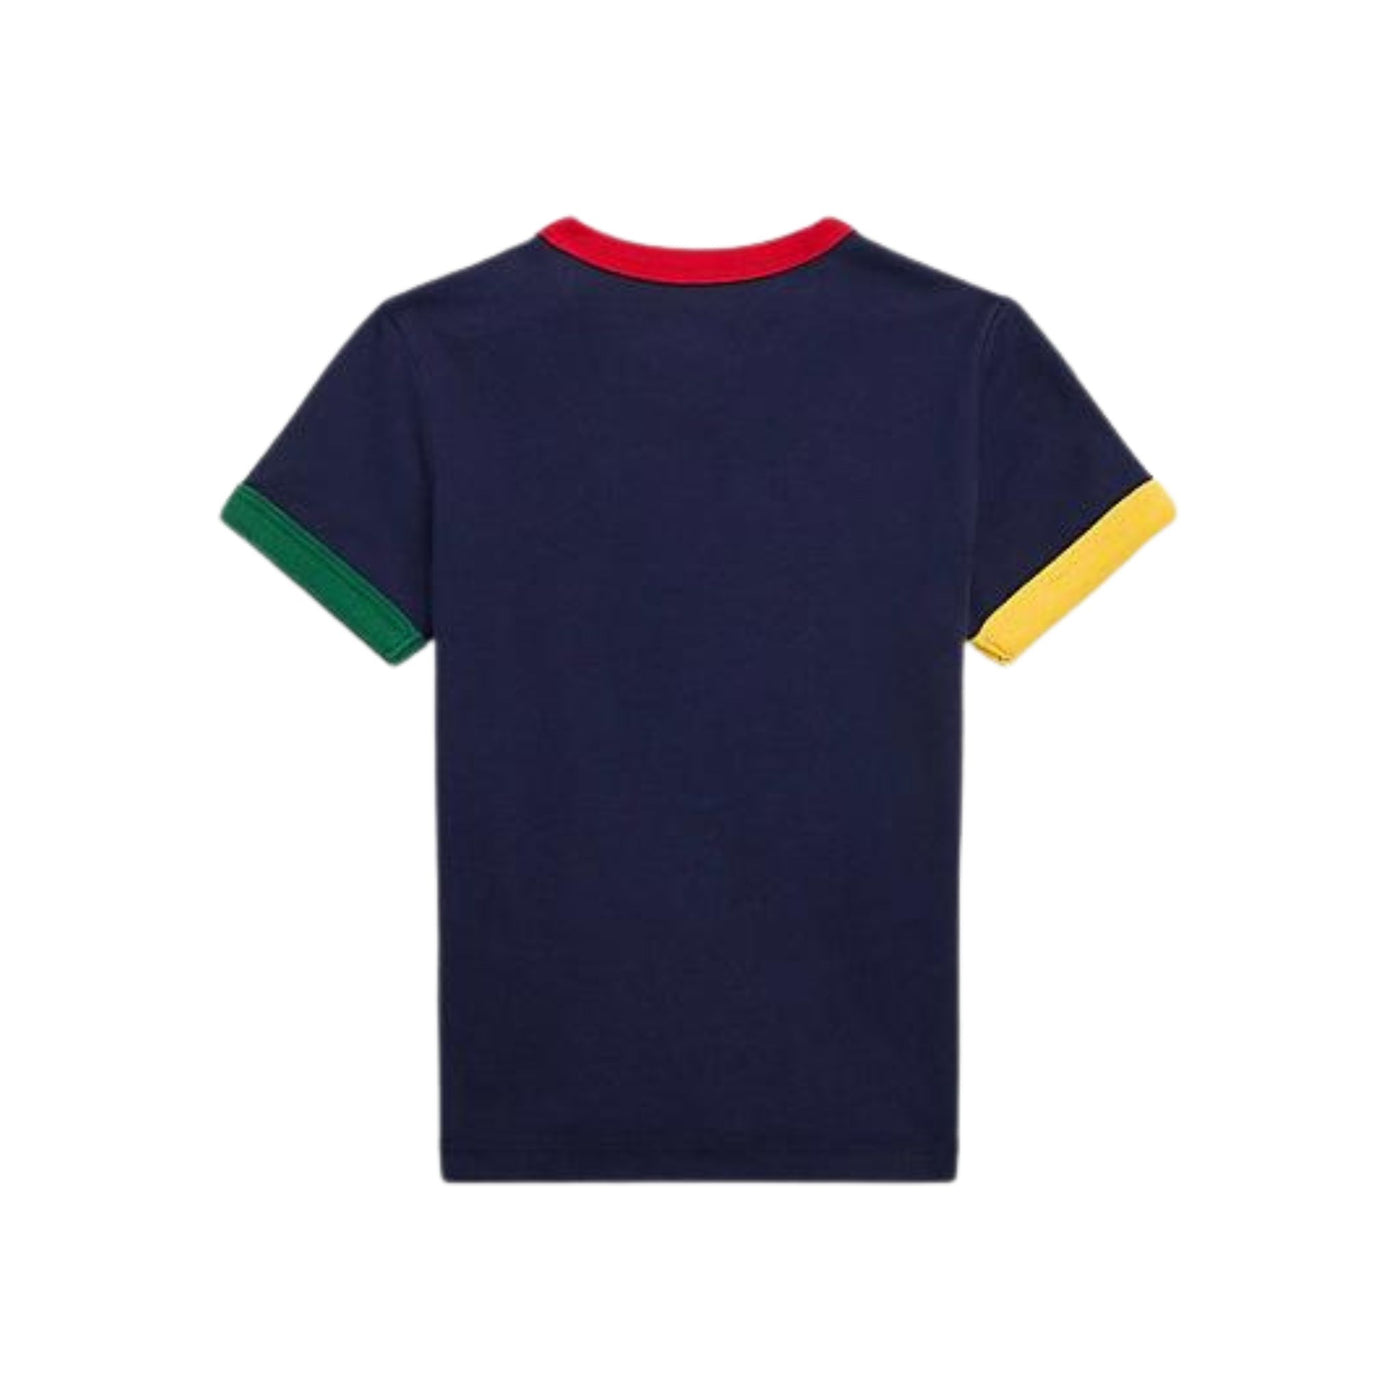 T-shirt neonato navy firmata Polo Ralph Lauren vista retro